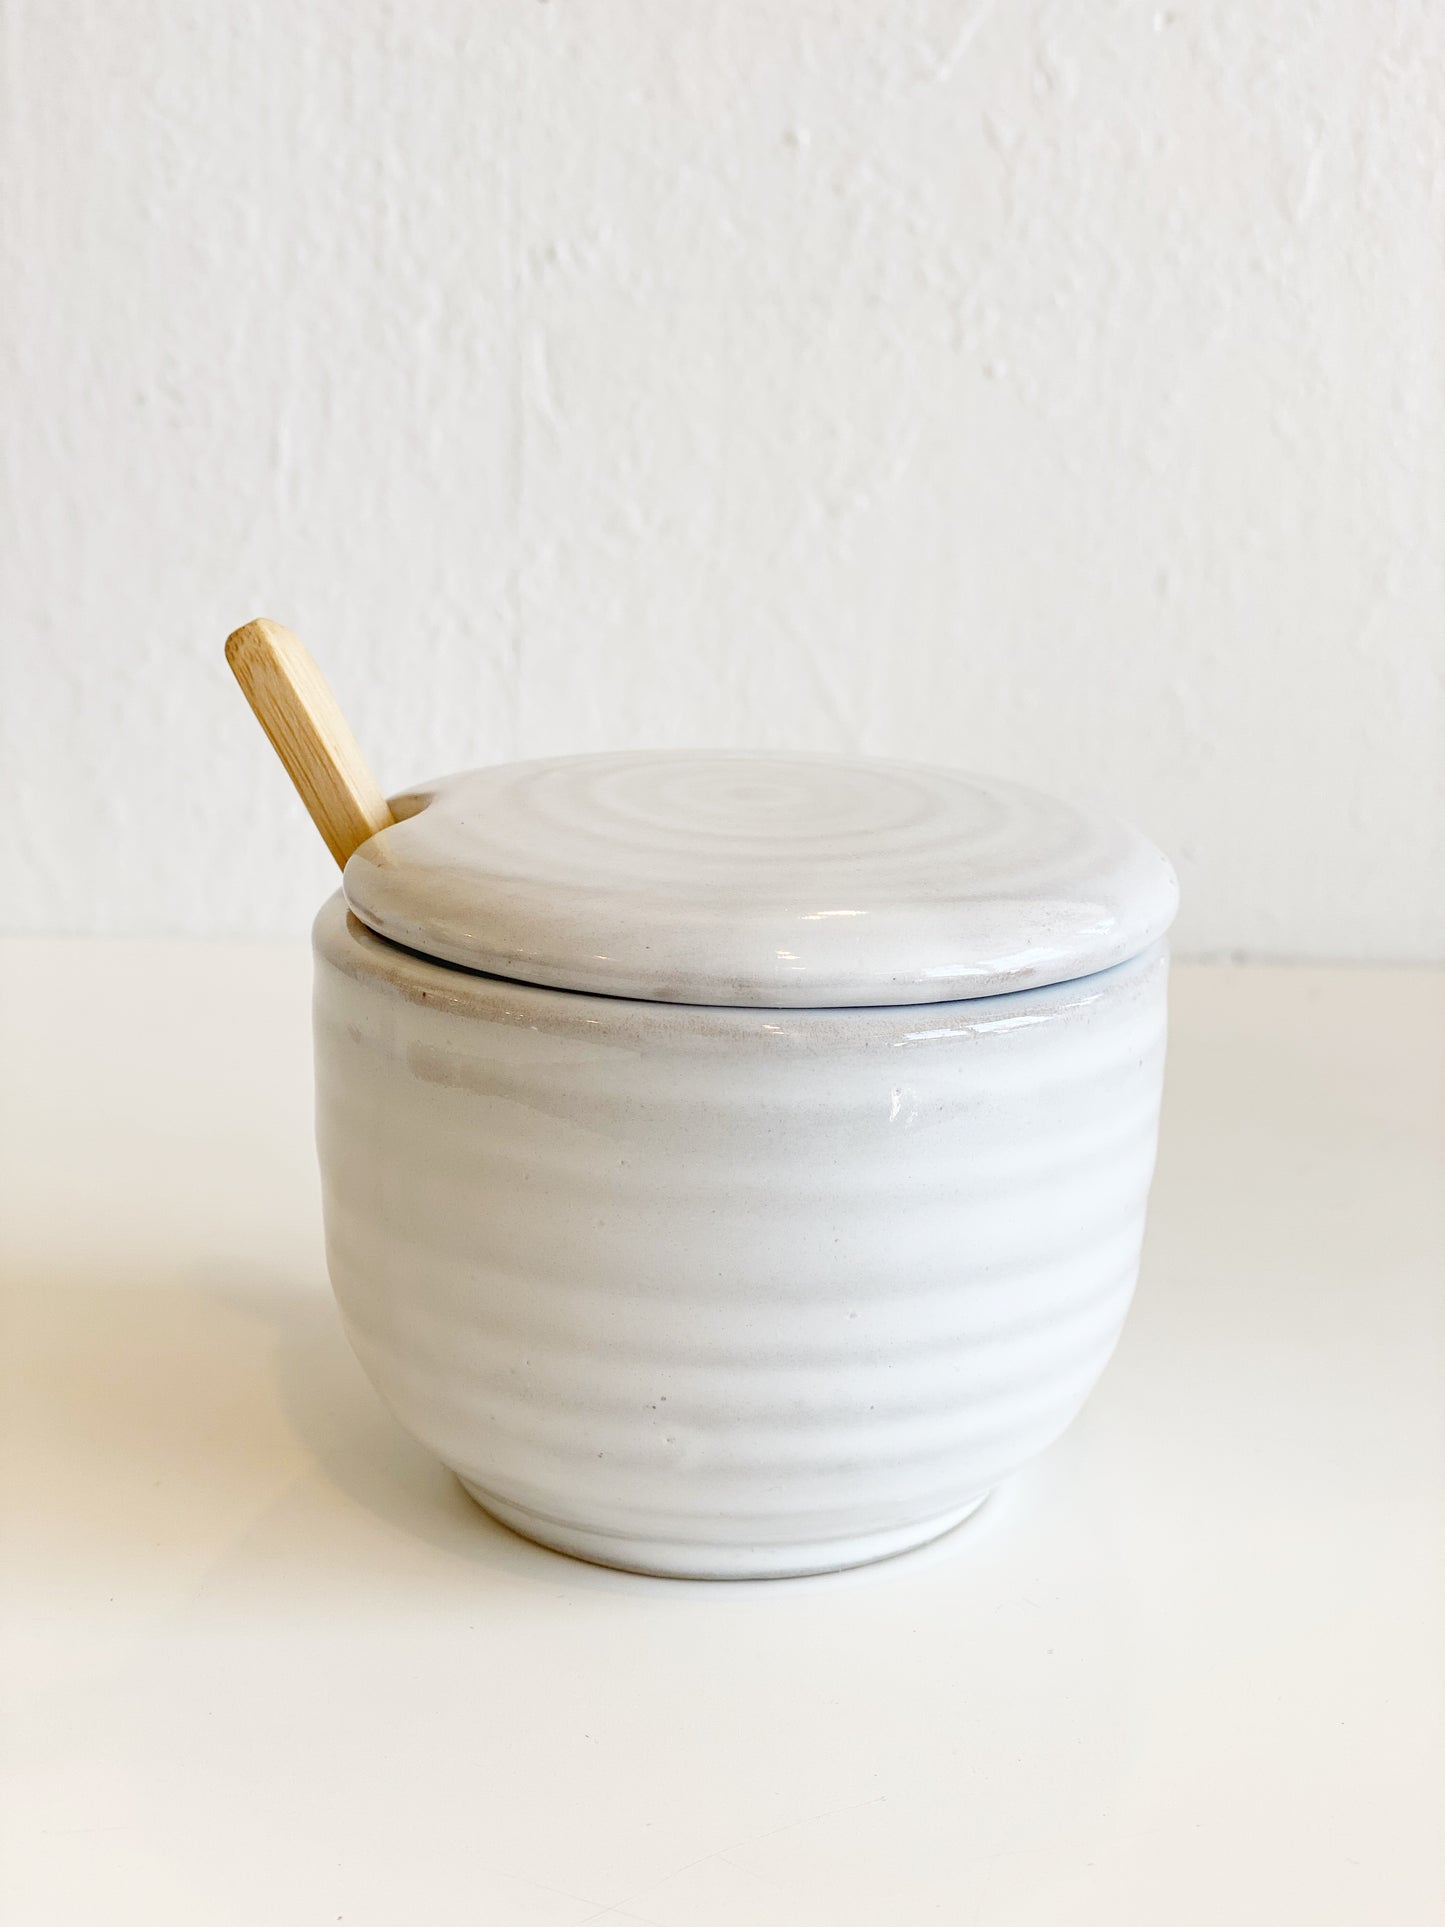 Ceramic Sugar Bowl with Wood Spoon